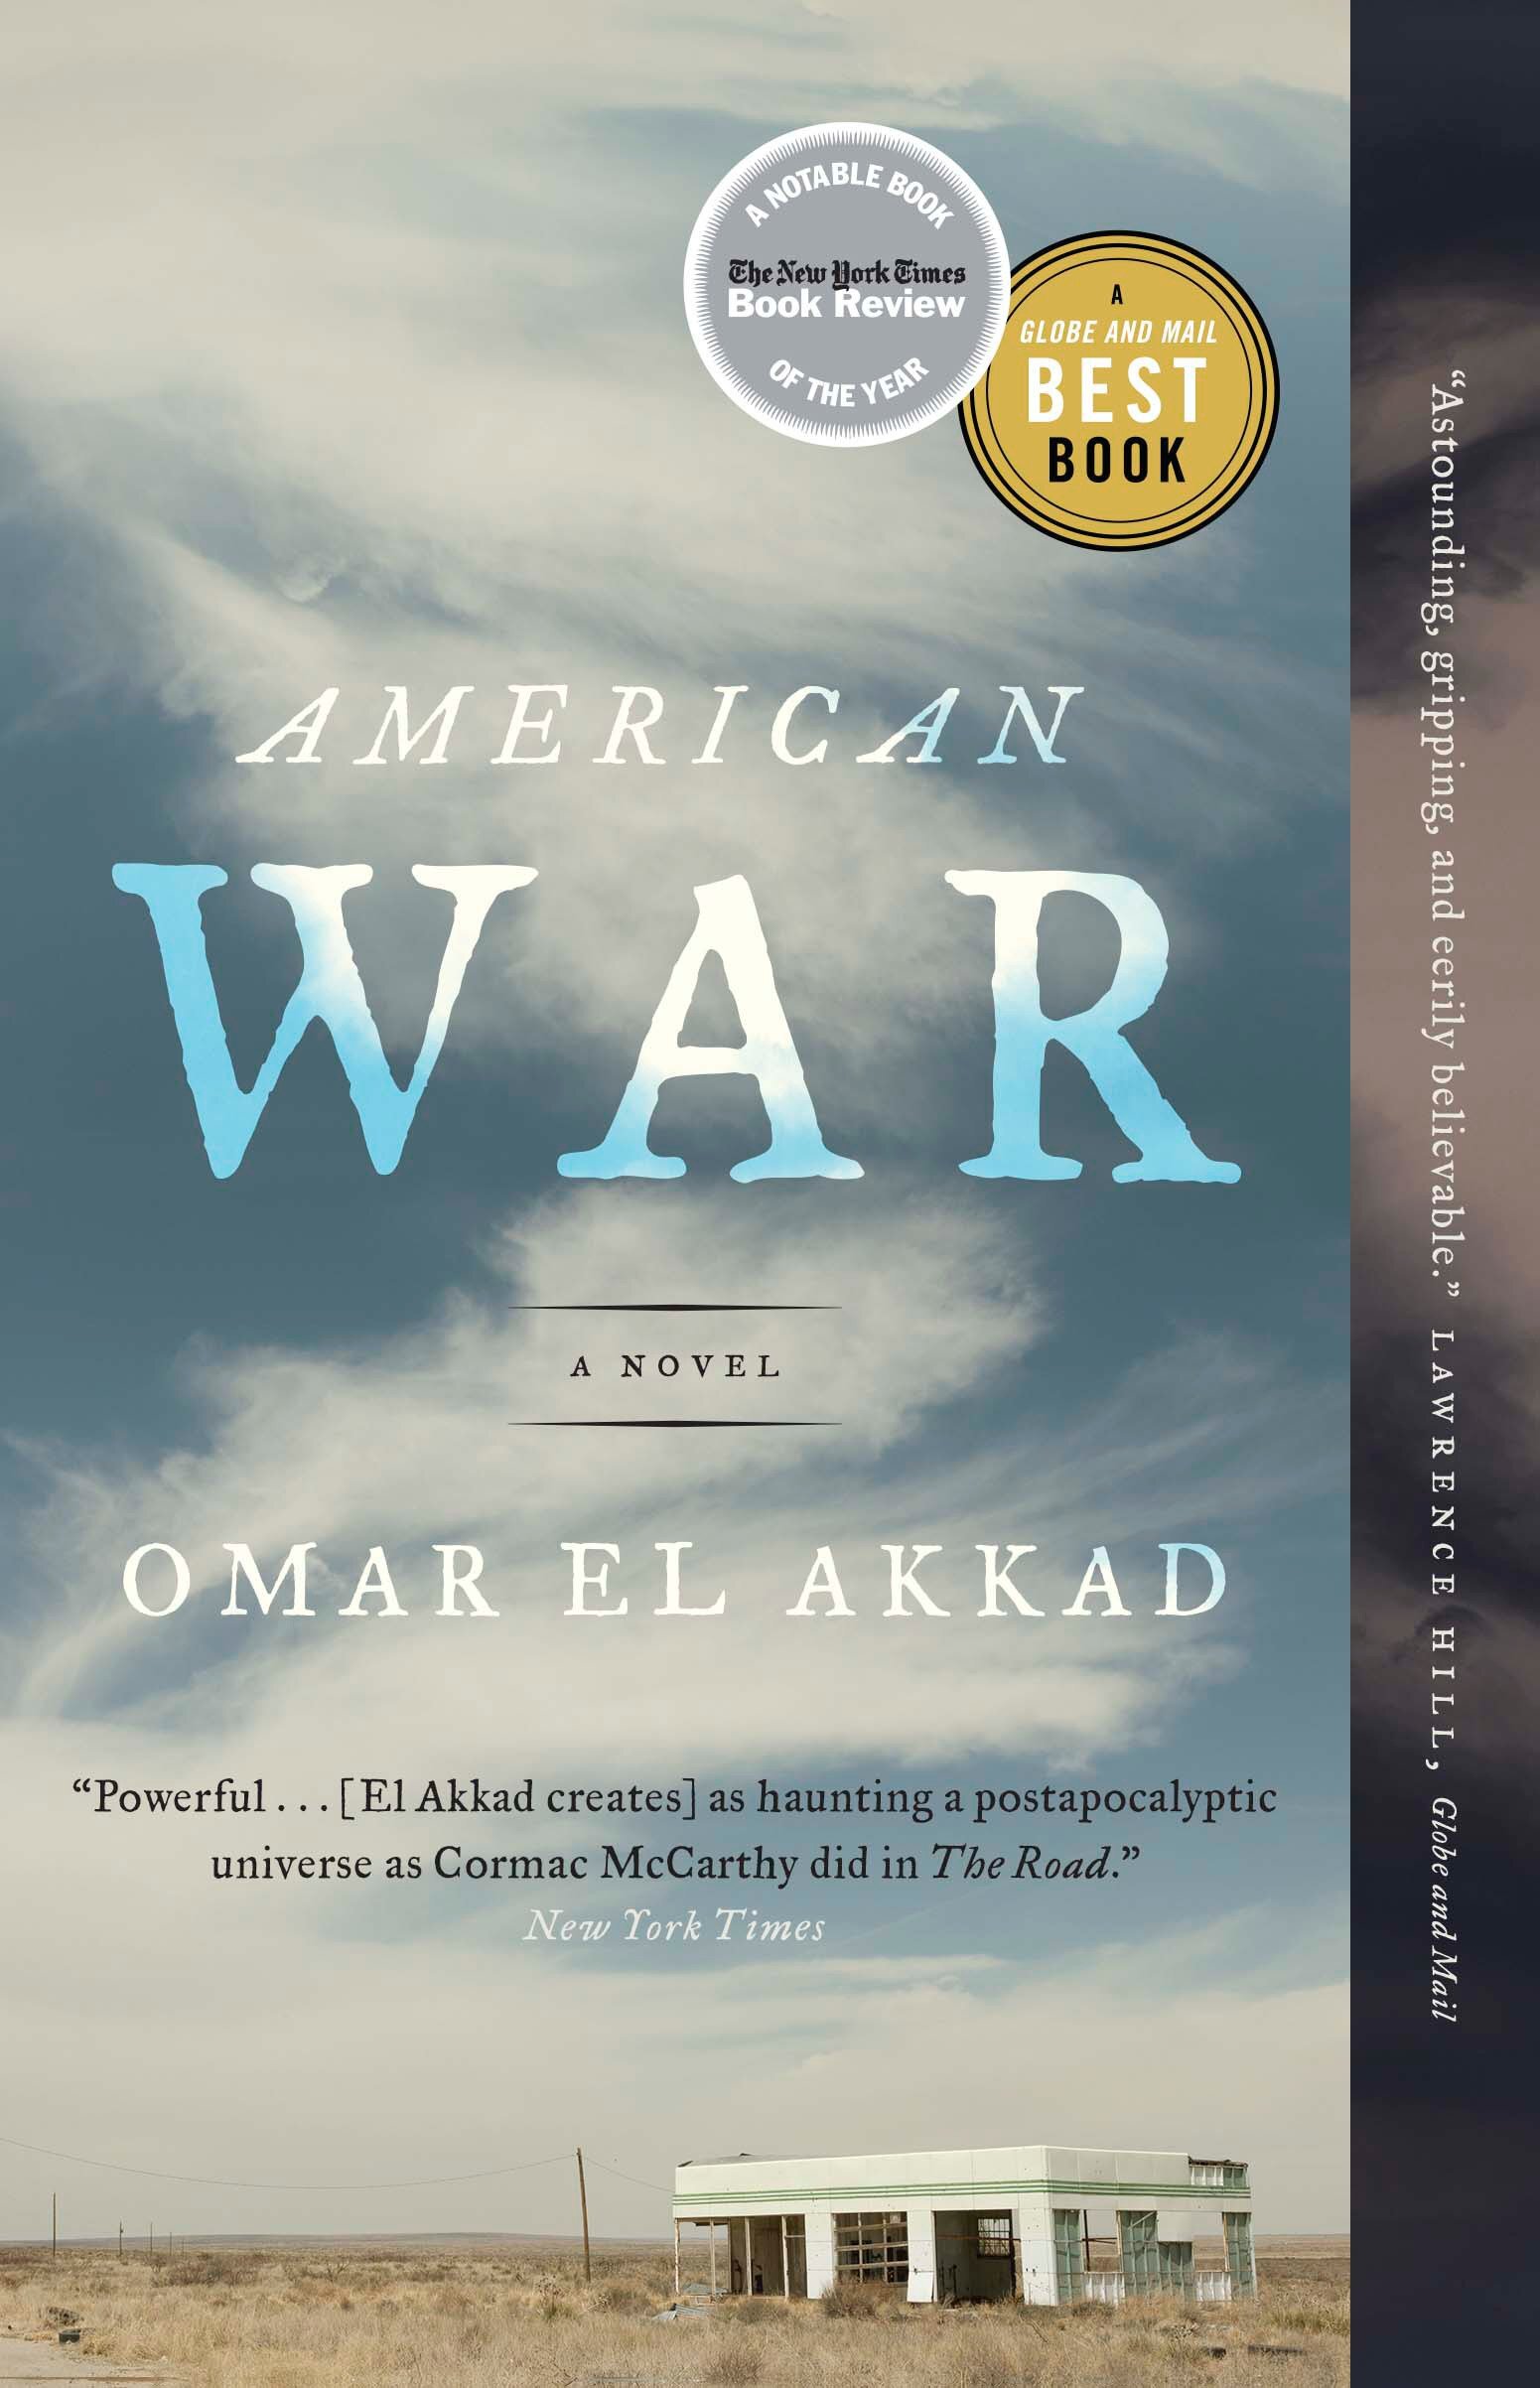 El Akkad, Omar - American War - Final pb cover.jpg